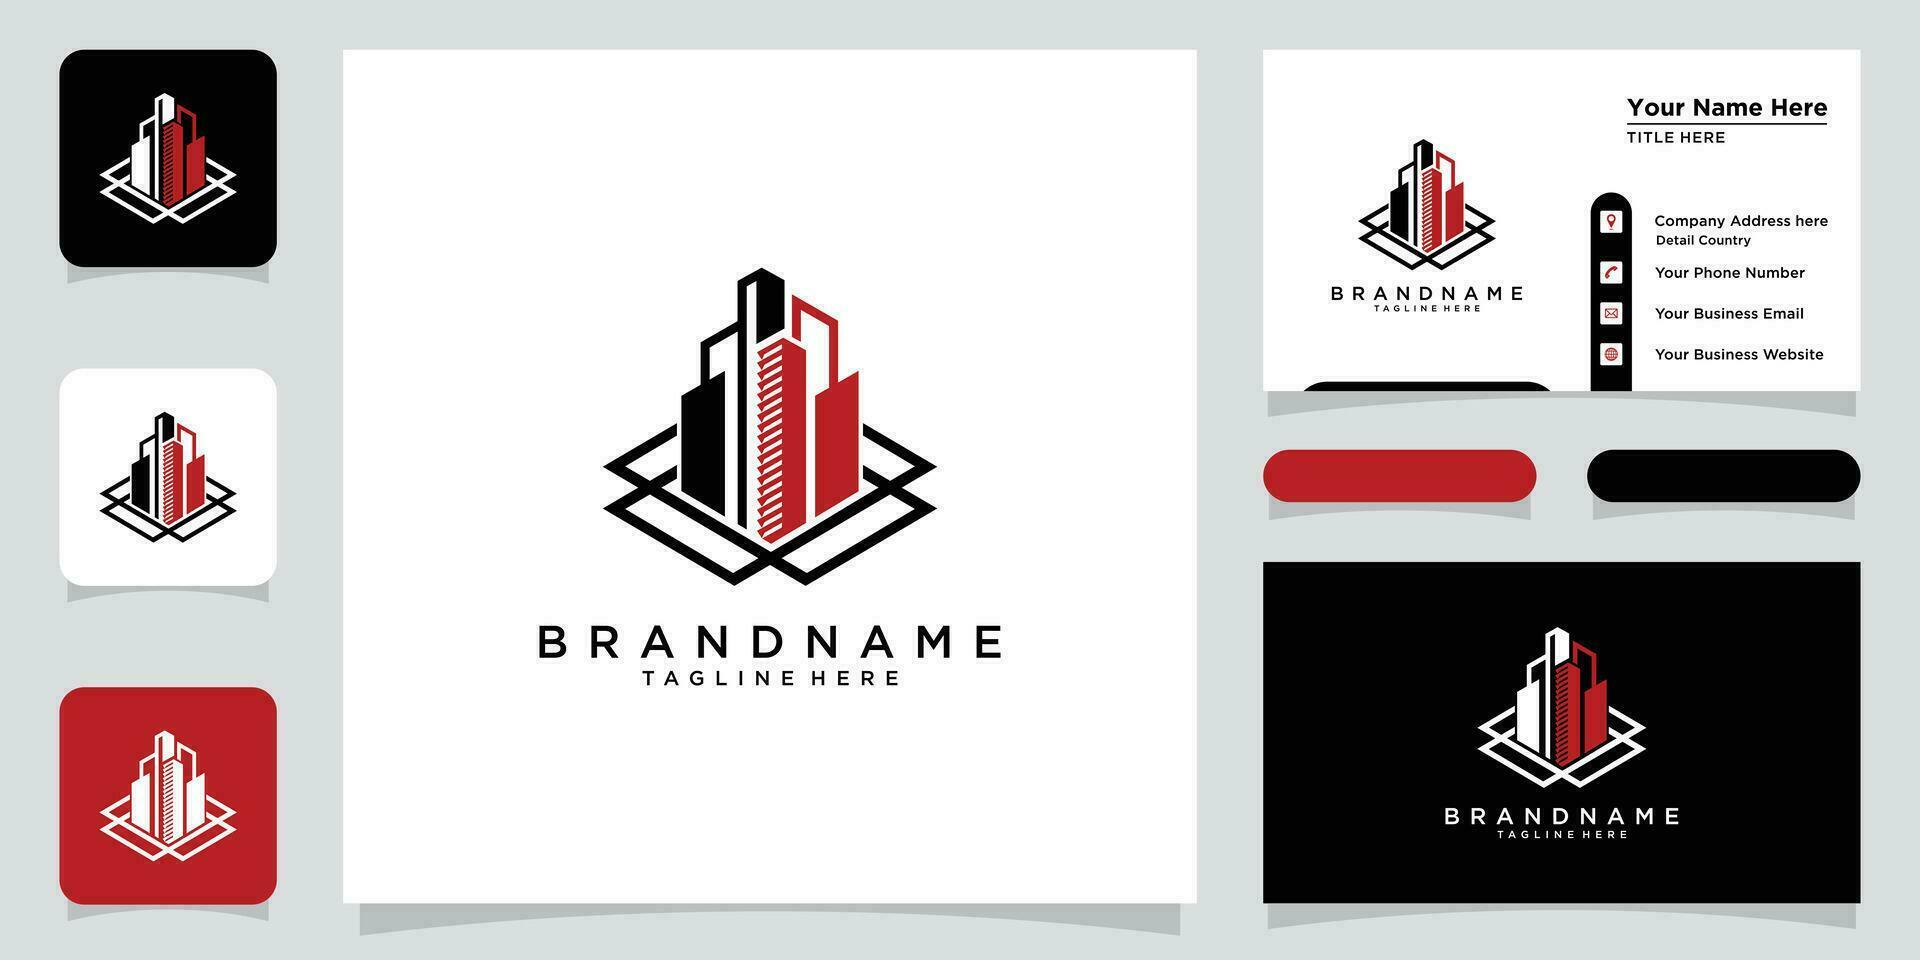 Cube building logo design element ,Building logo ,Cube icon with business card design Premium Vector